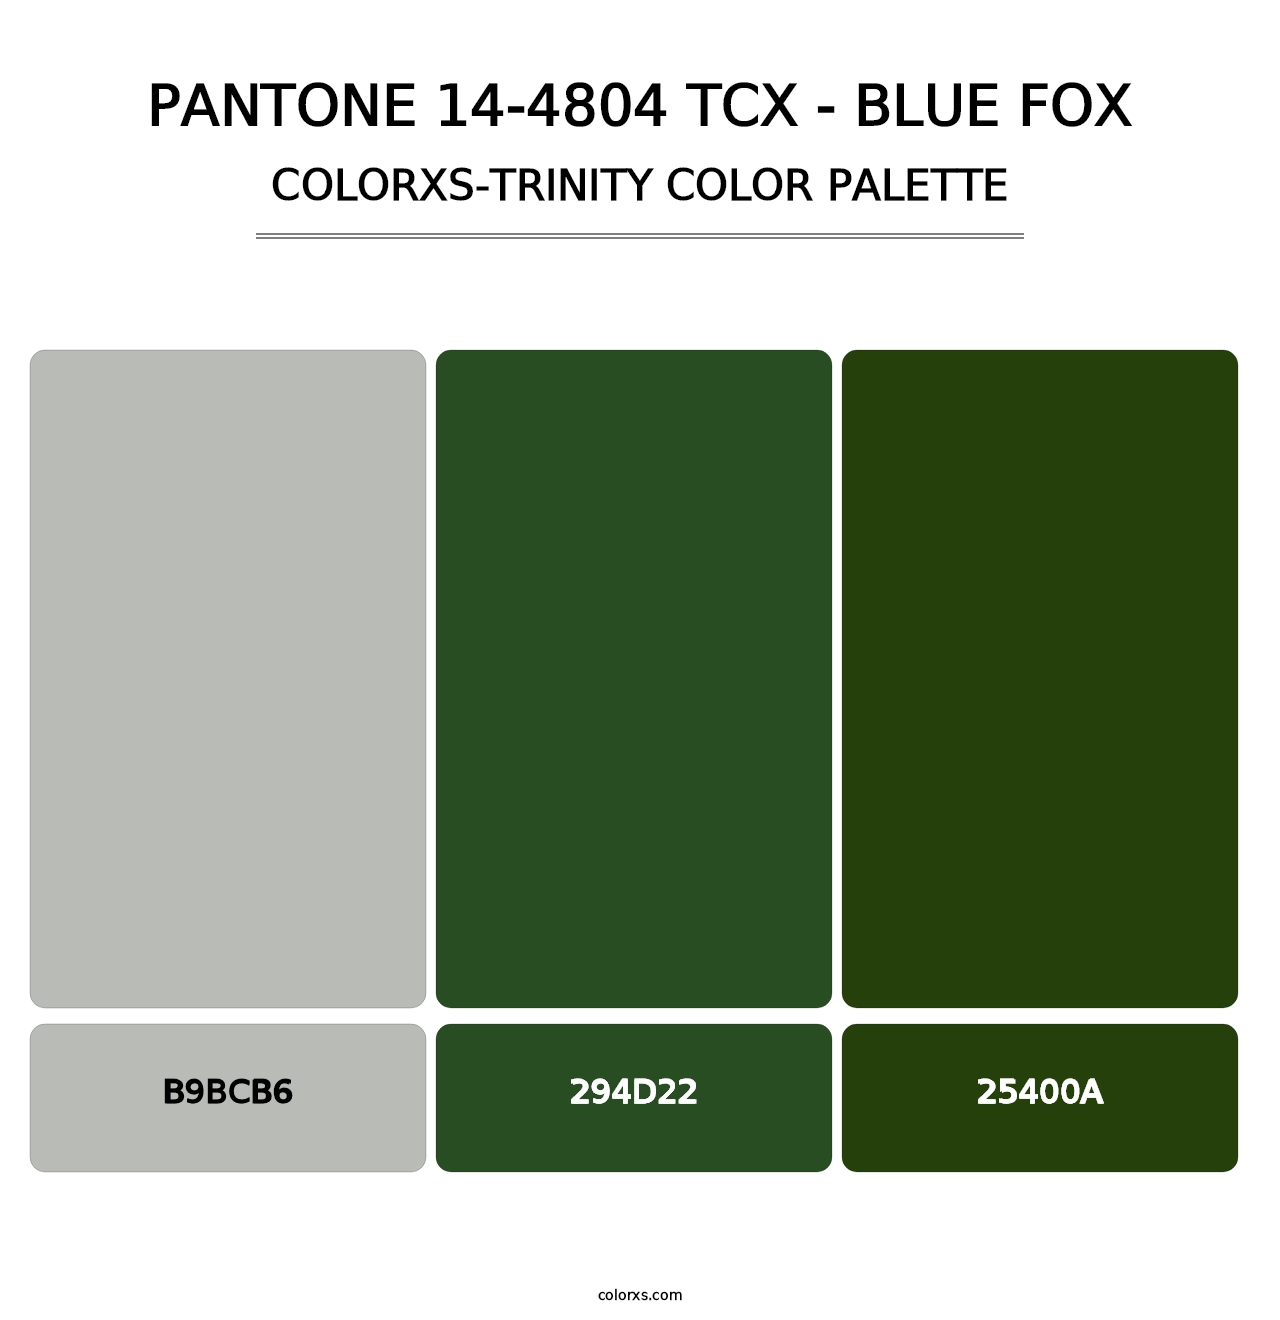 PANTONE 14-4804 TCX - Blue Fox - Colorxs Trinity Palette